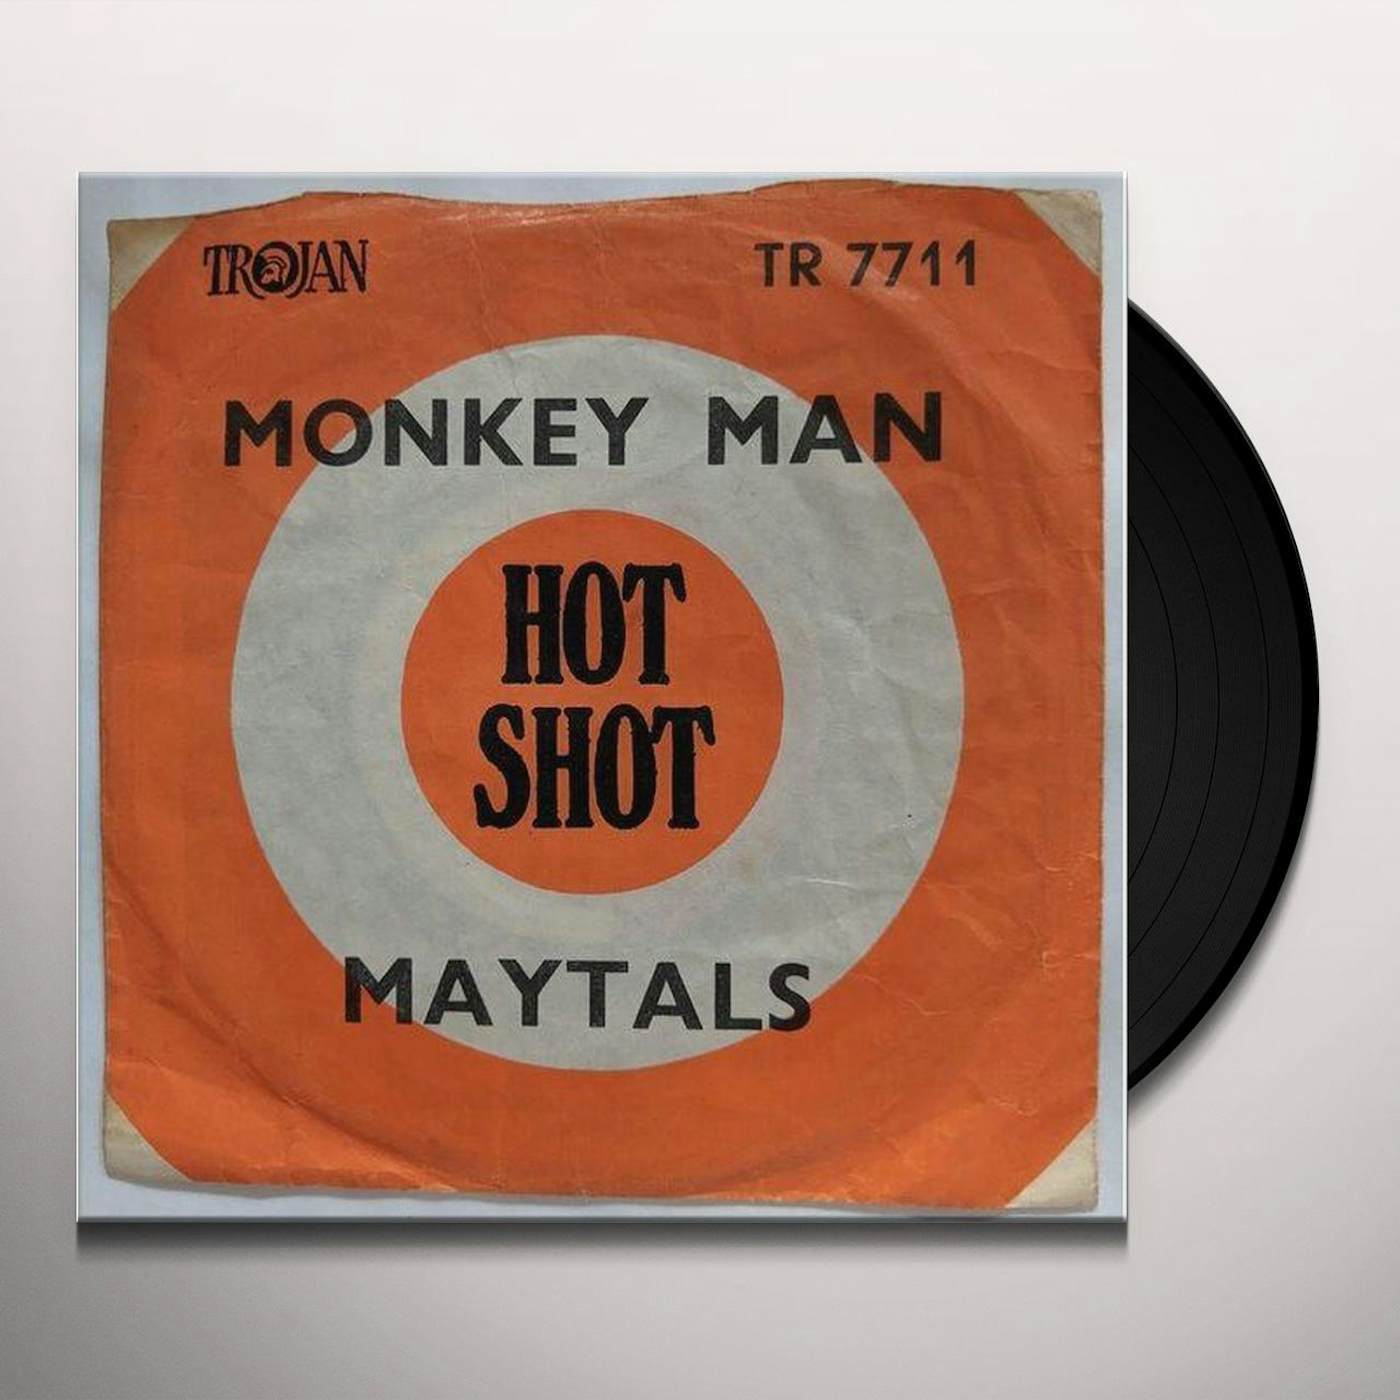 The Maytals Monkey Man Vinyl Record